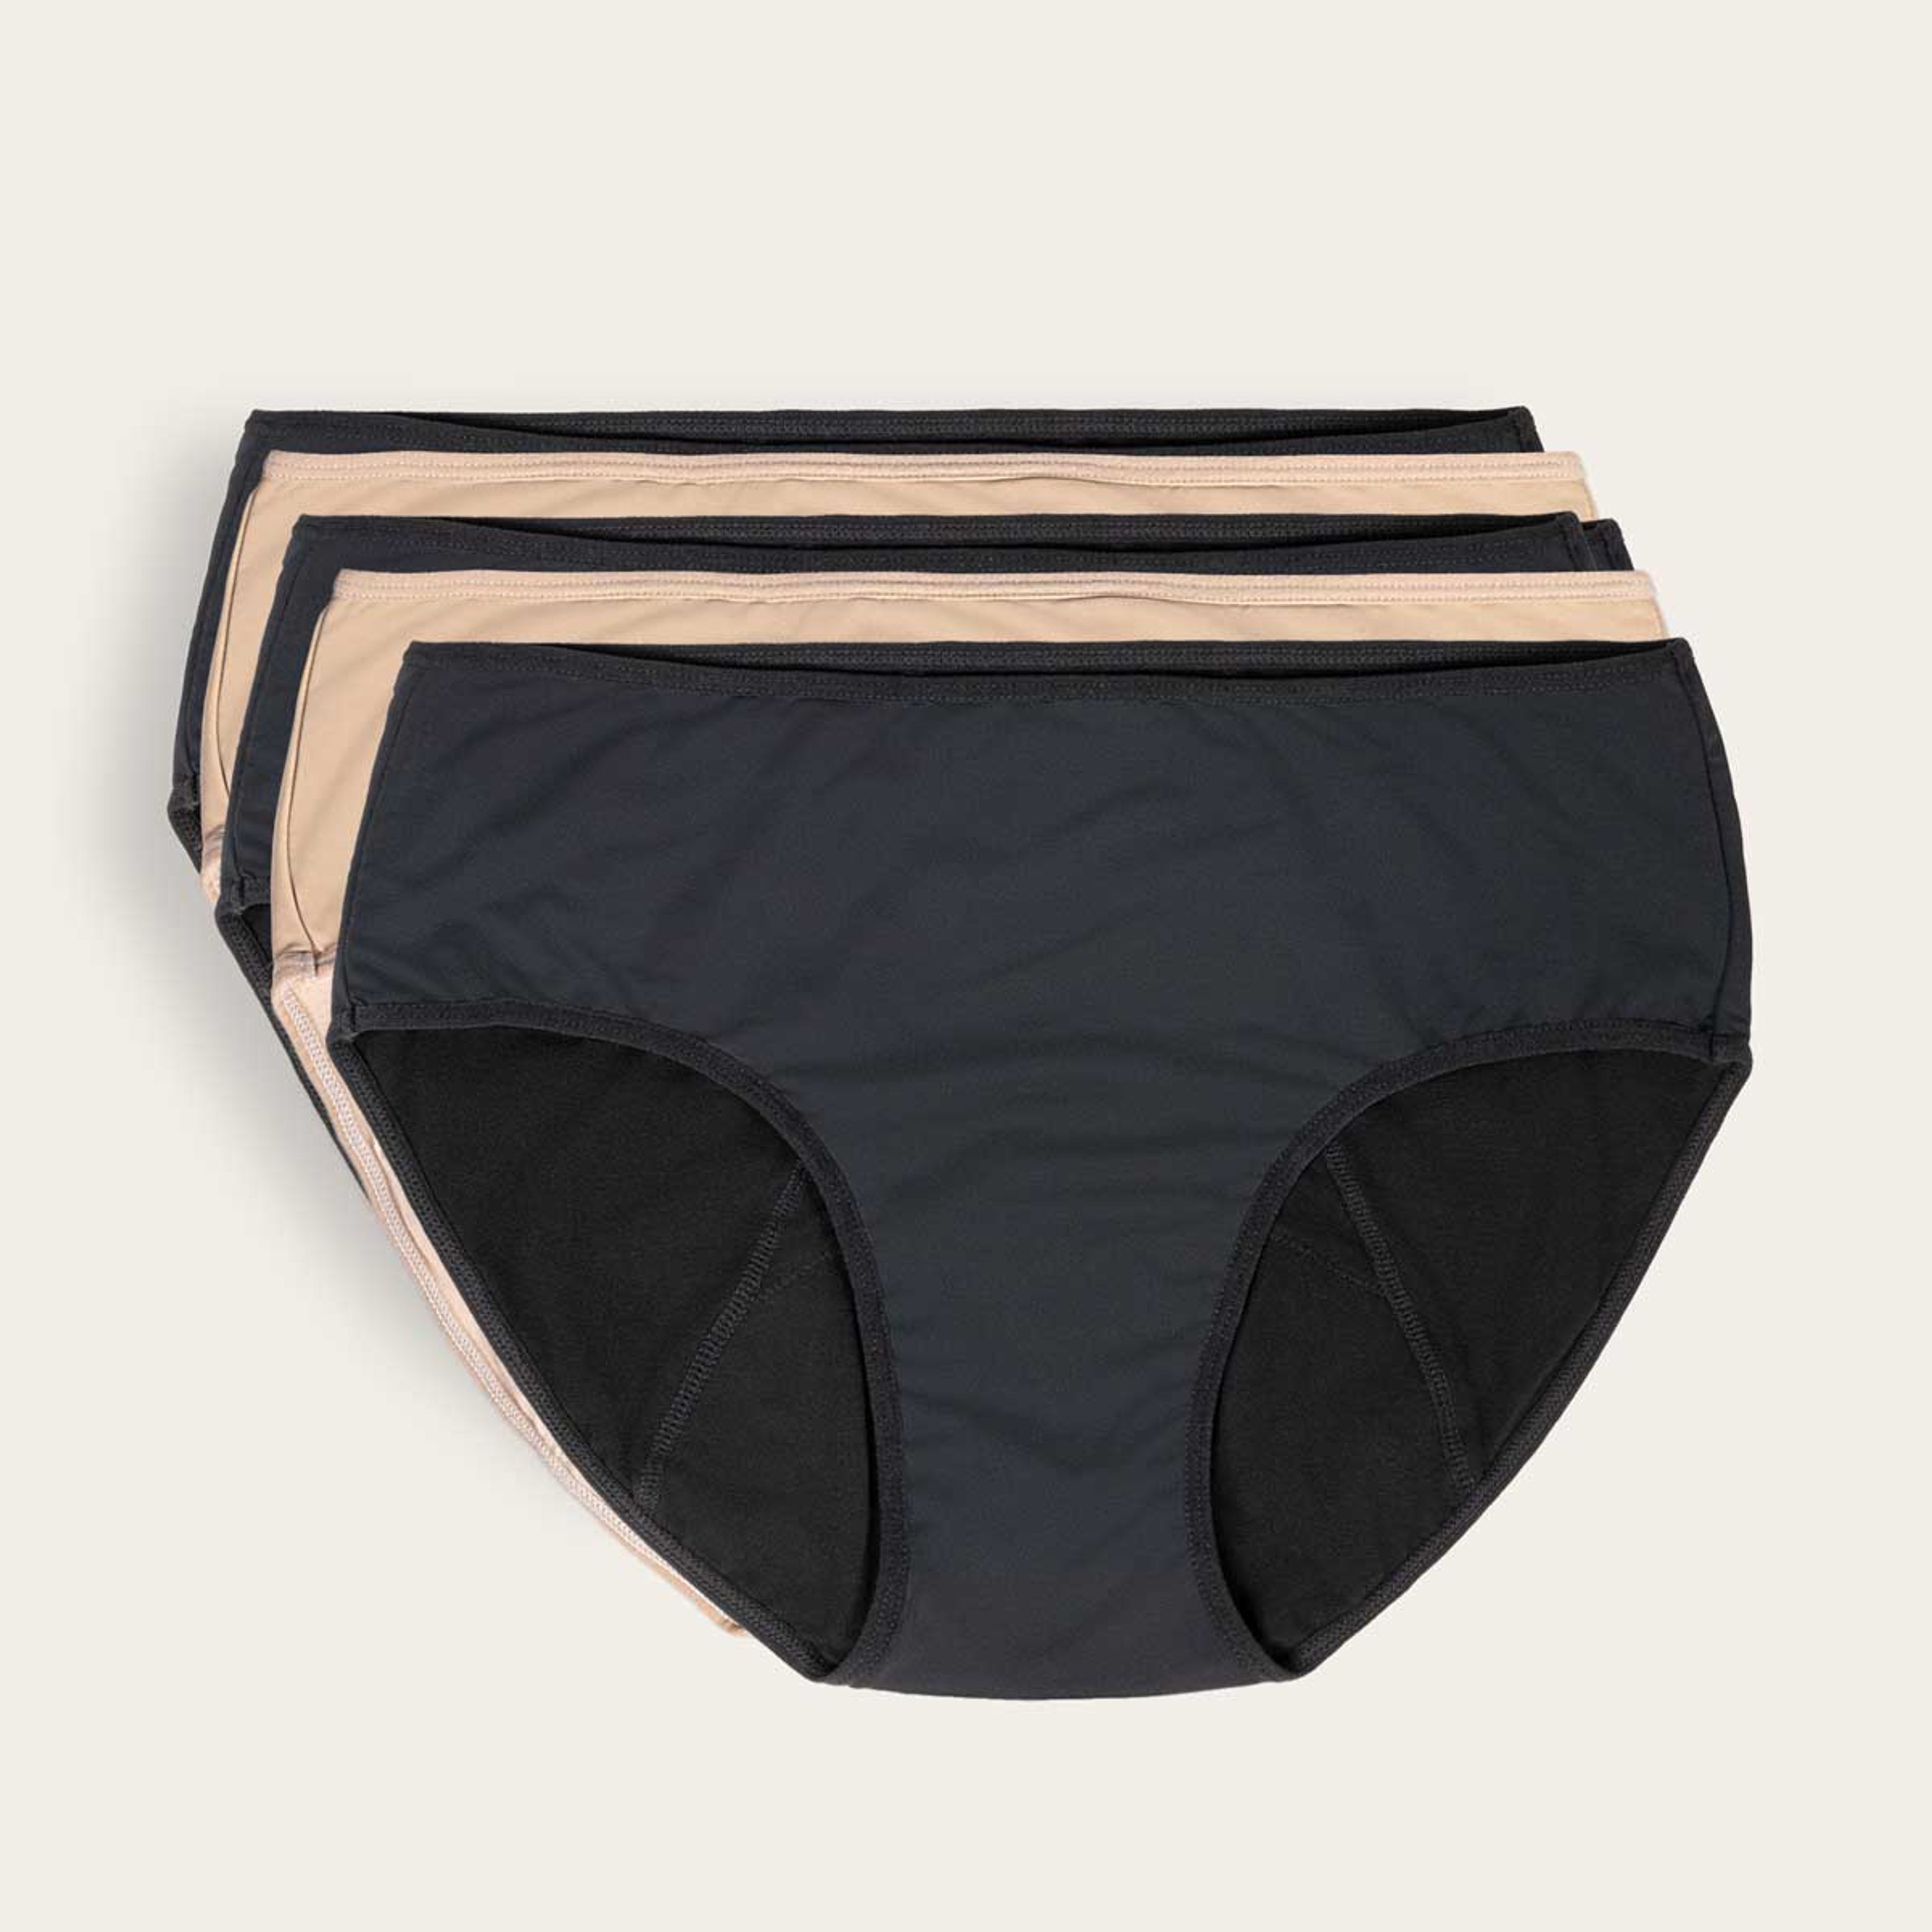 Nyssa 3-Ct VieWear Period Comfort Underwear + Uterine Ice/Heat Saver Set on  Marmalade